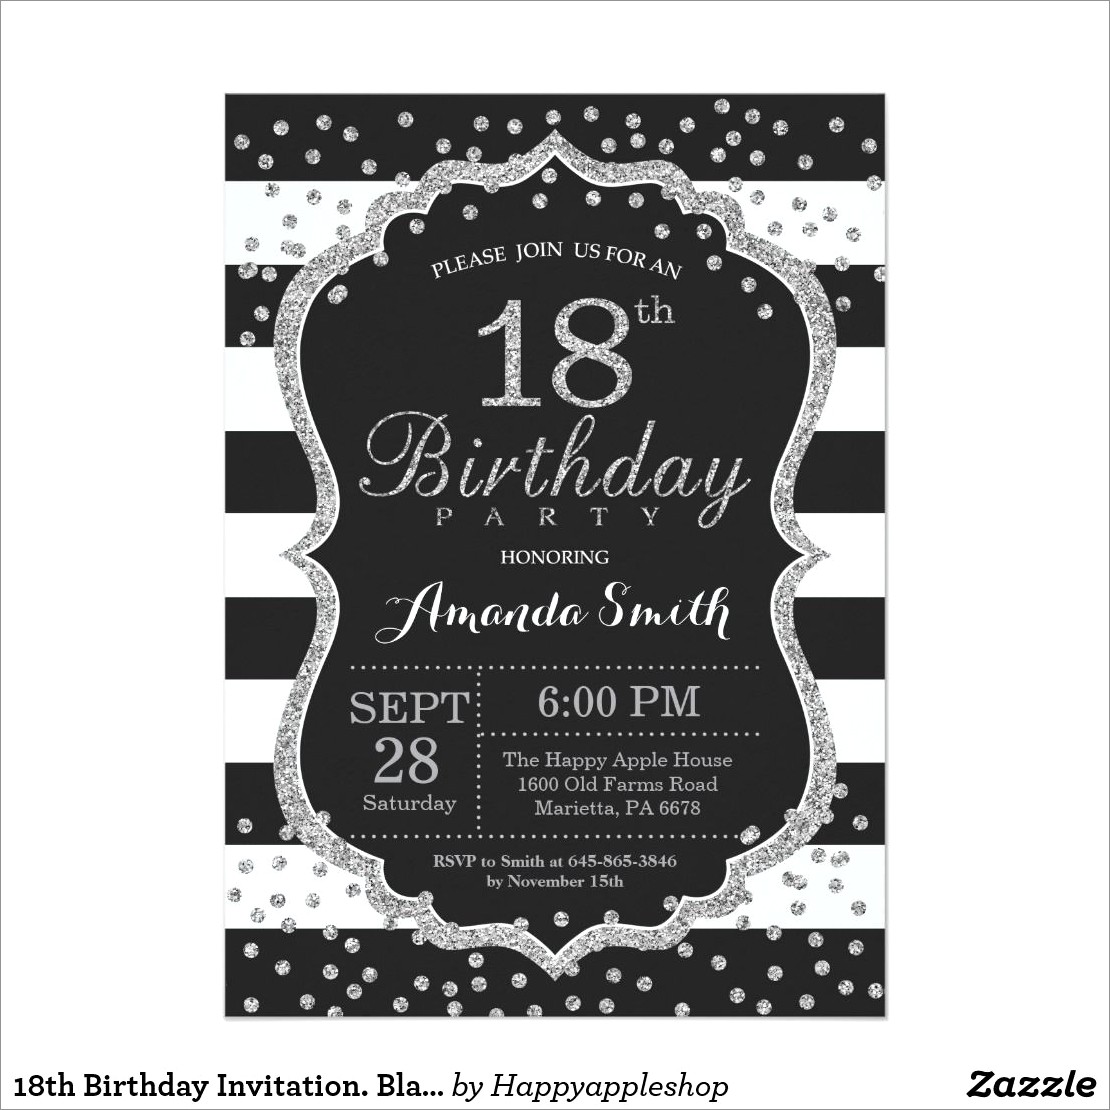 Black And Silver 40th Birthday Invitations